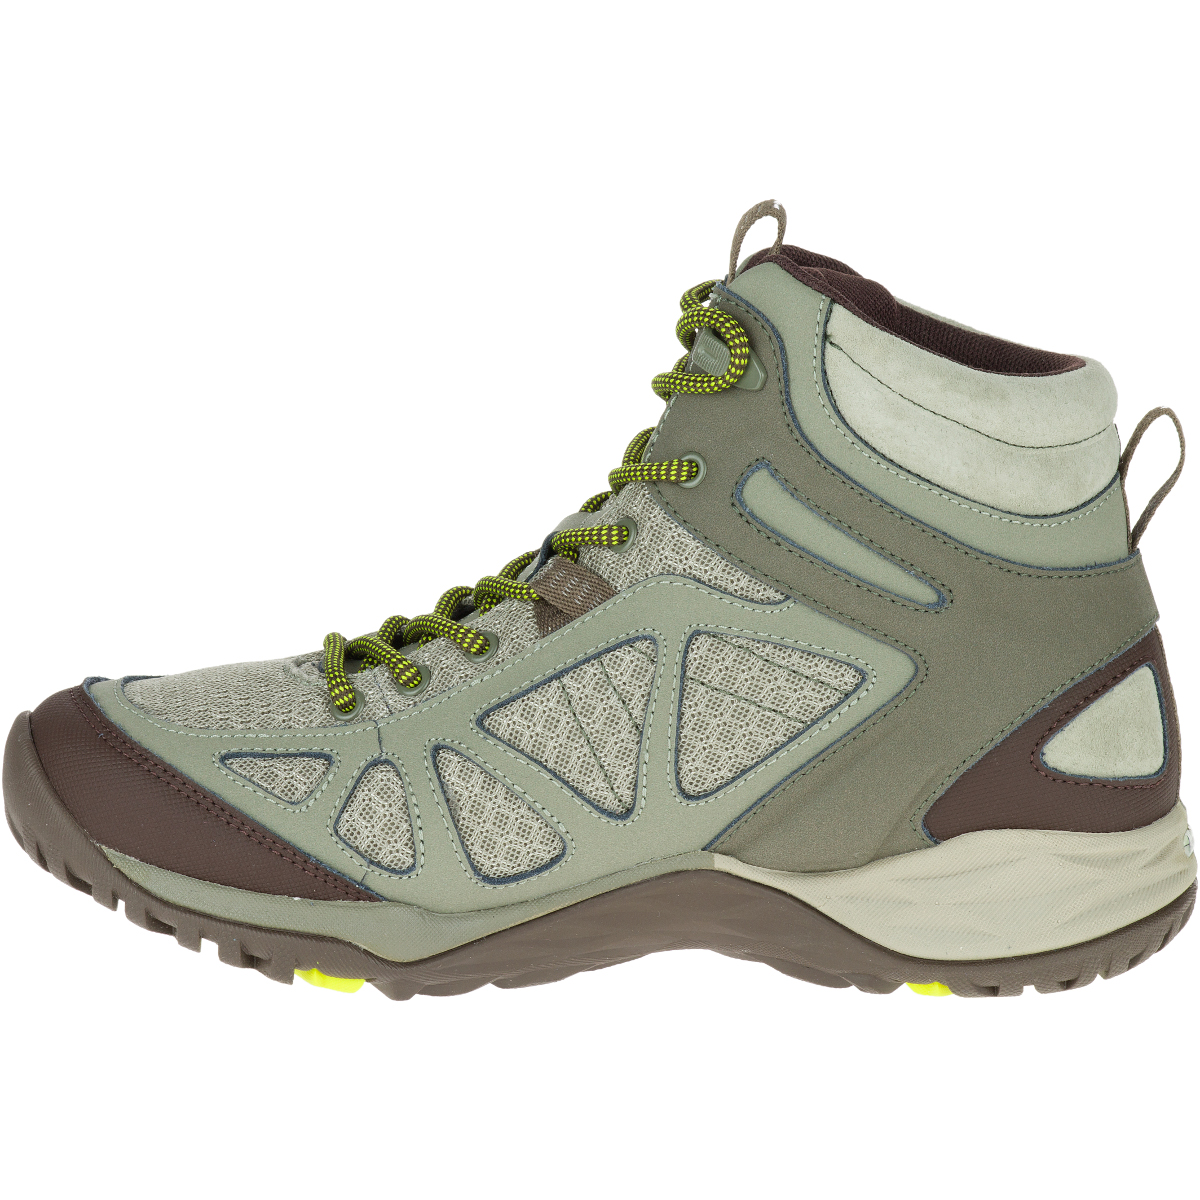 merrell women's siren sport q2 mid waterproof hiking boots